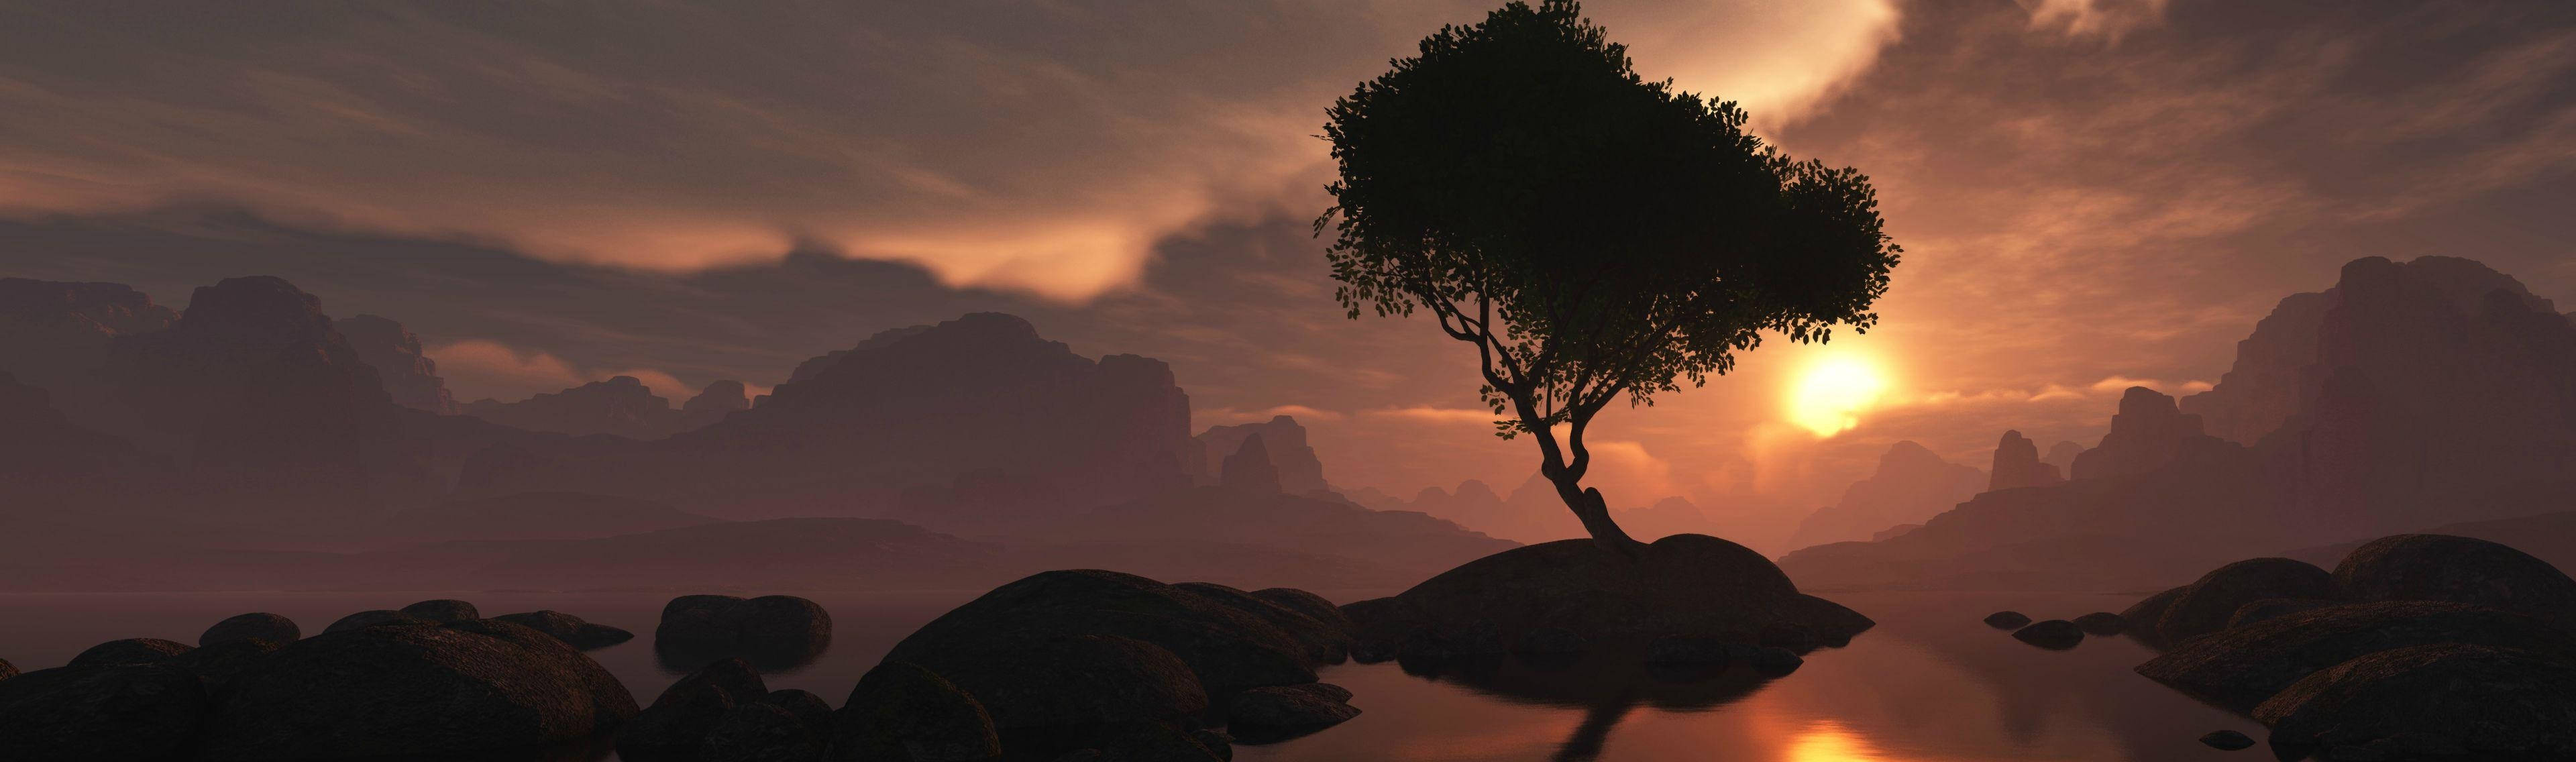 4k Dual Monitor Tree On Mountain Edge At Sunset Background